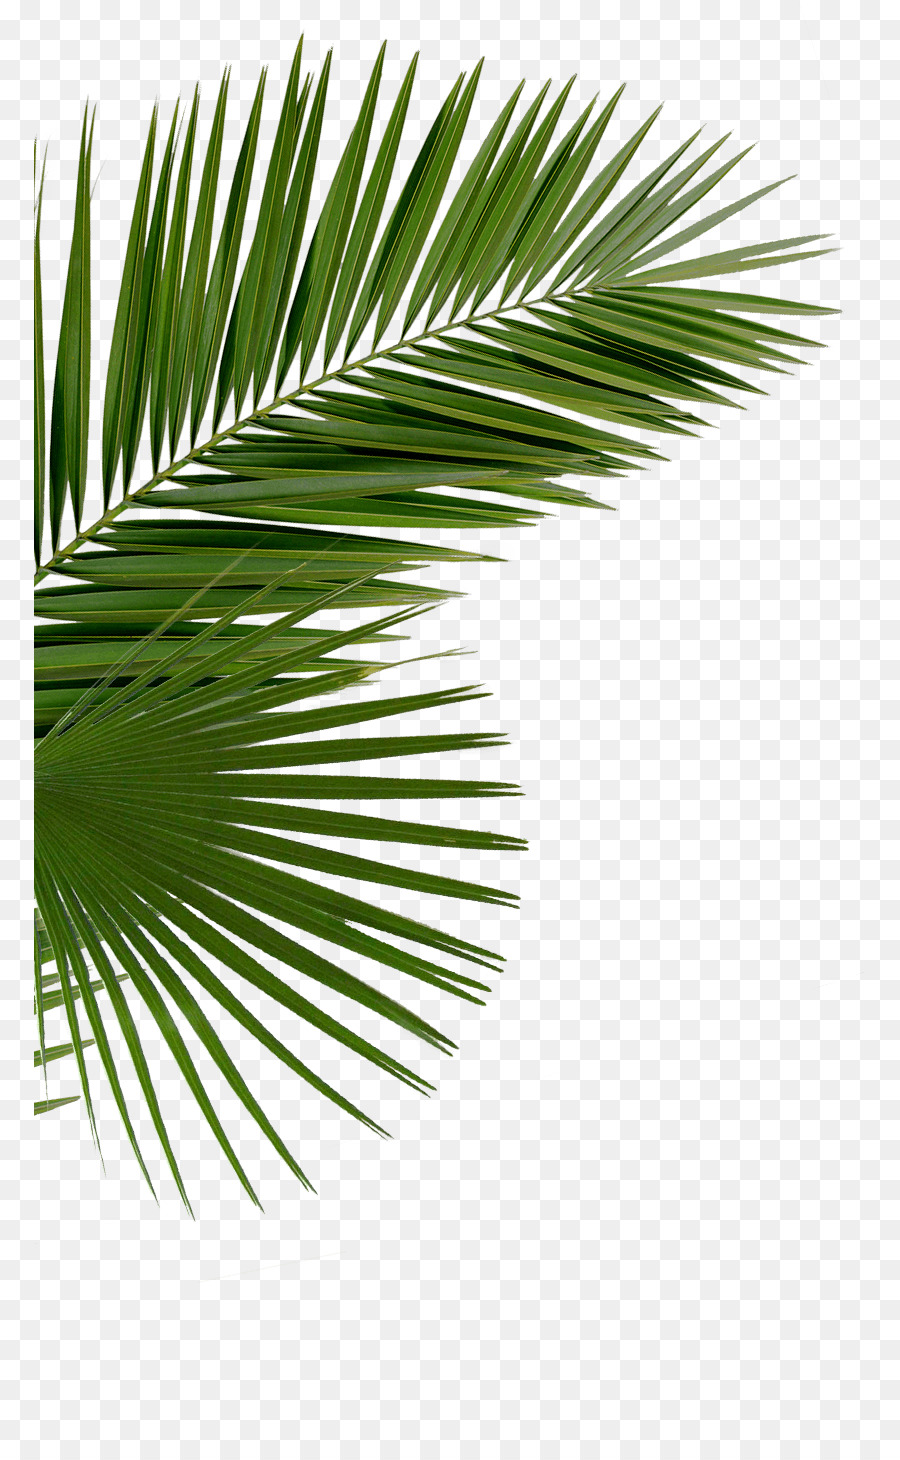 Asian palmyra palm Arecaceae Saw palmetto Palm branch Palm-leaf manuscript - date palm png download - 831*1454 - Free Transparent Asian Palmyra Palm png Download.